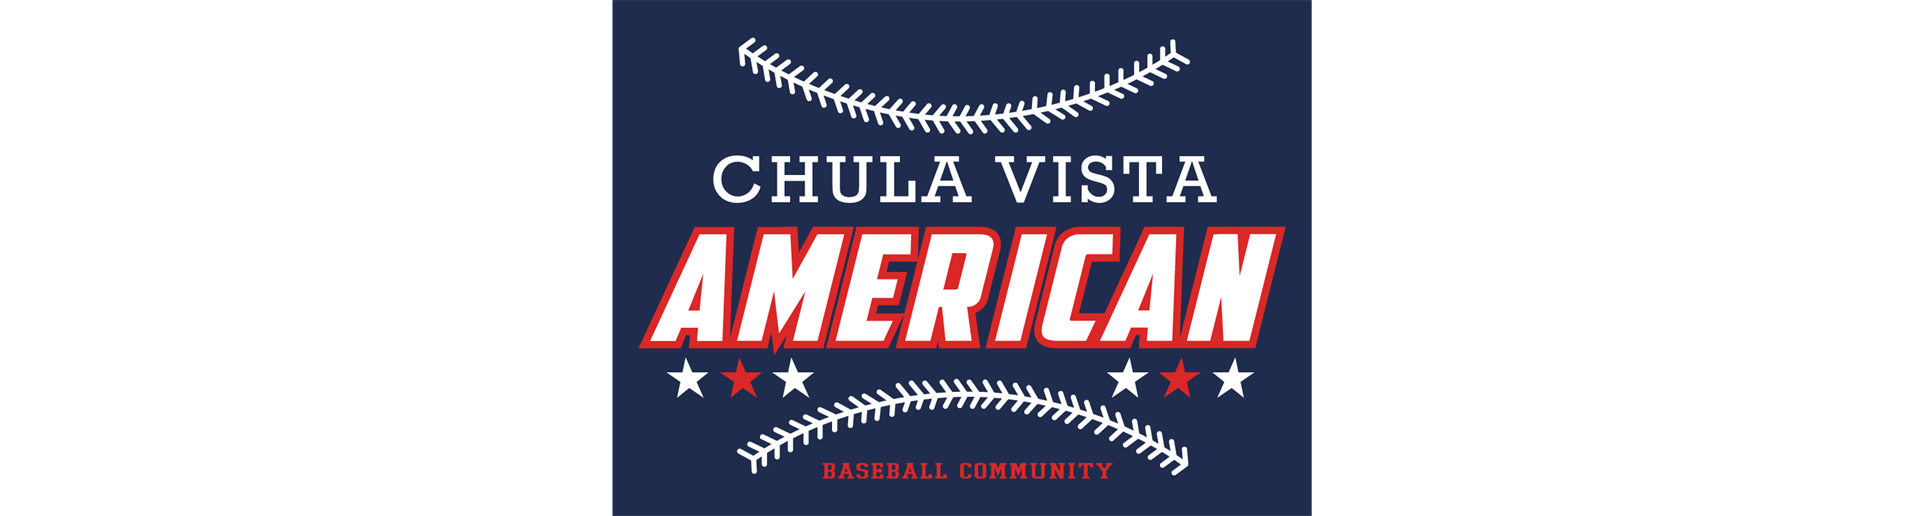 Chula Vista American